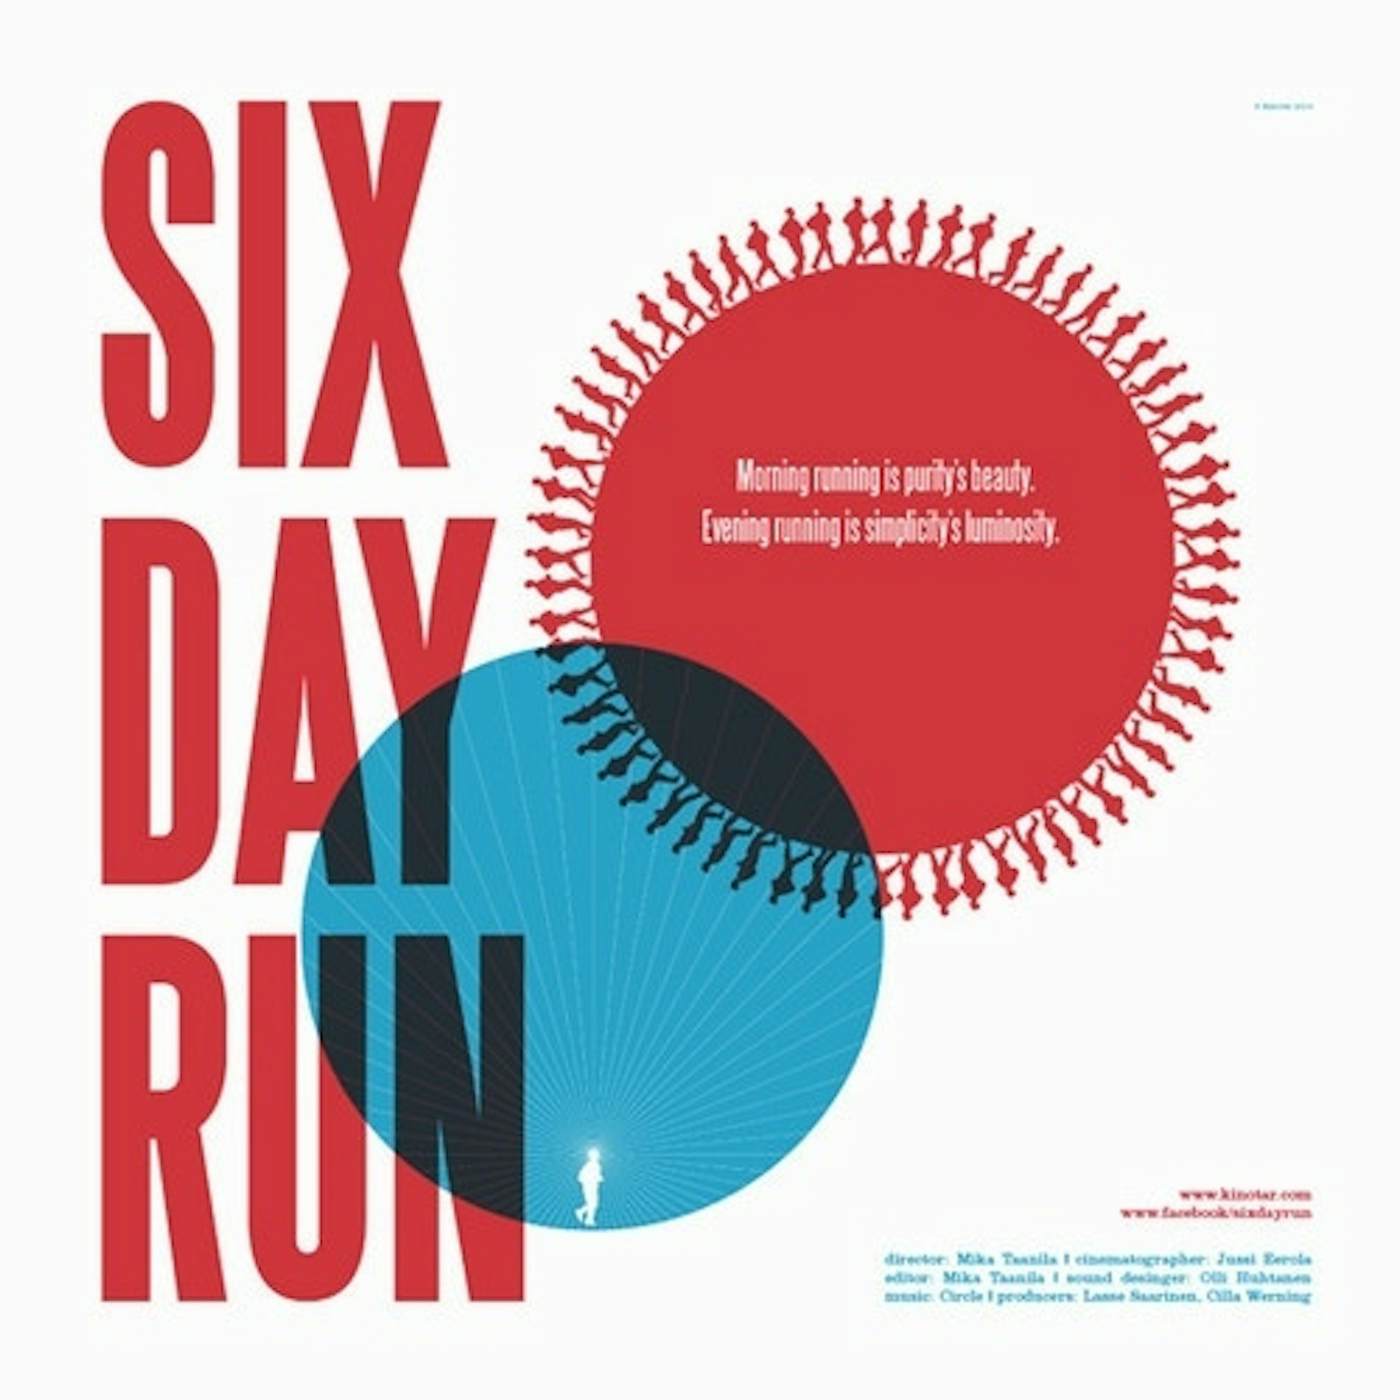 Circle SIX DAY RUN Vinyl Record